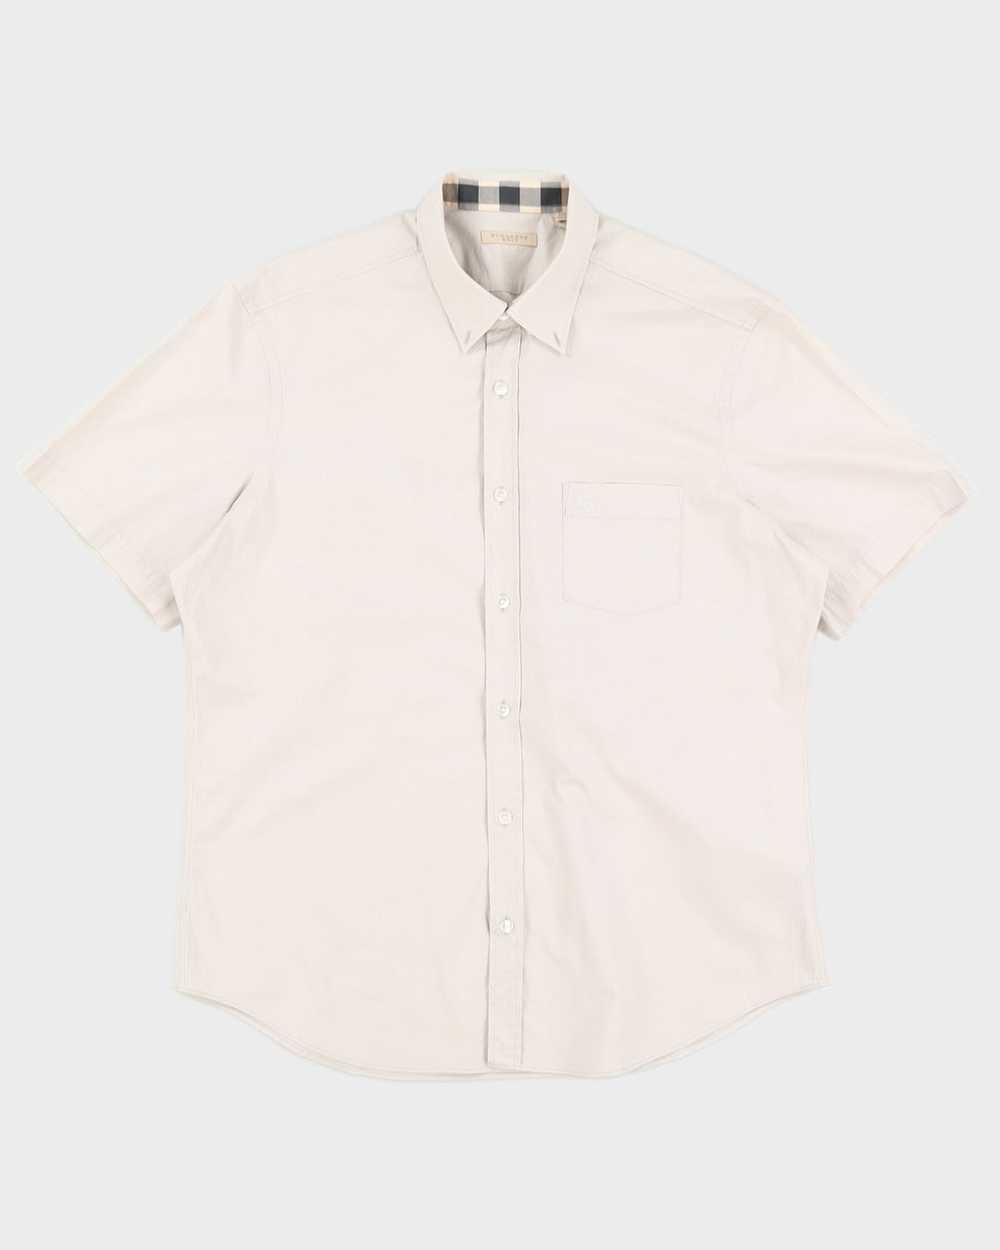 Burberry Brit Grey Short Sleeved Shirt - XL - image 1